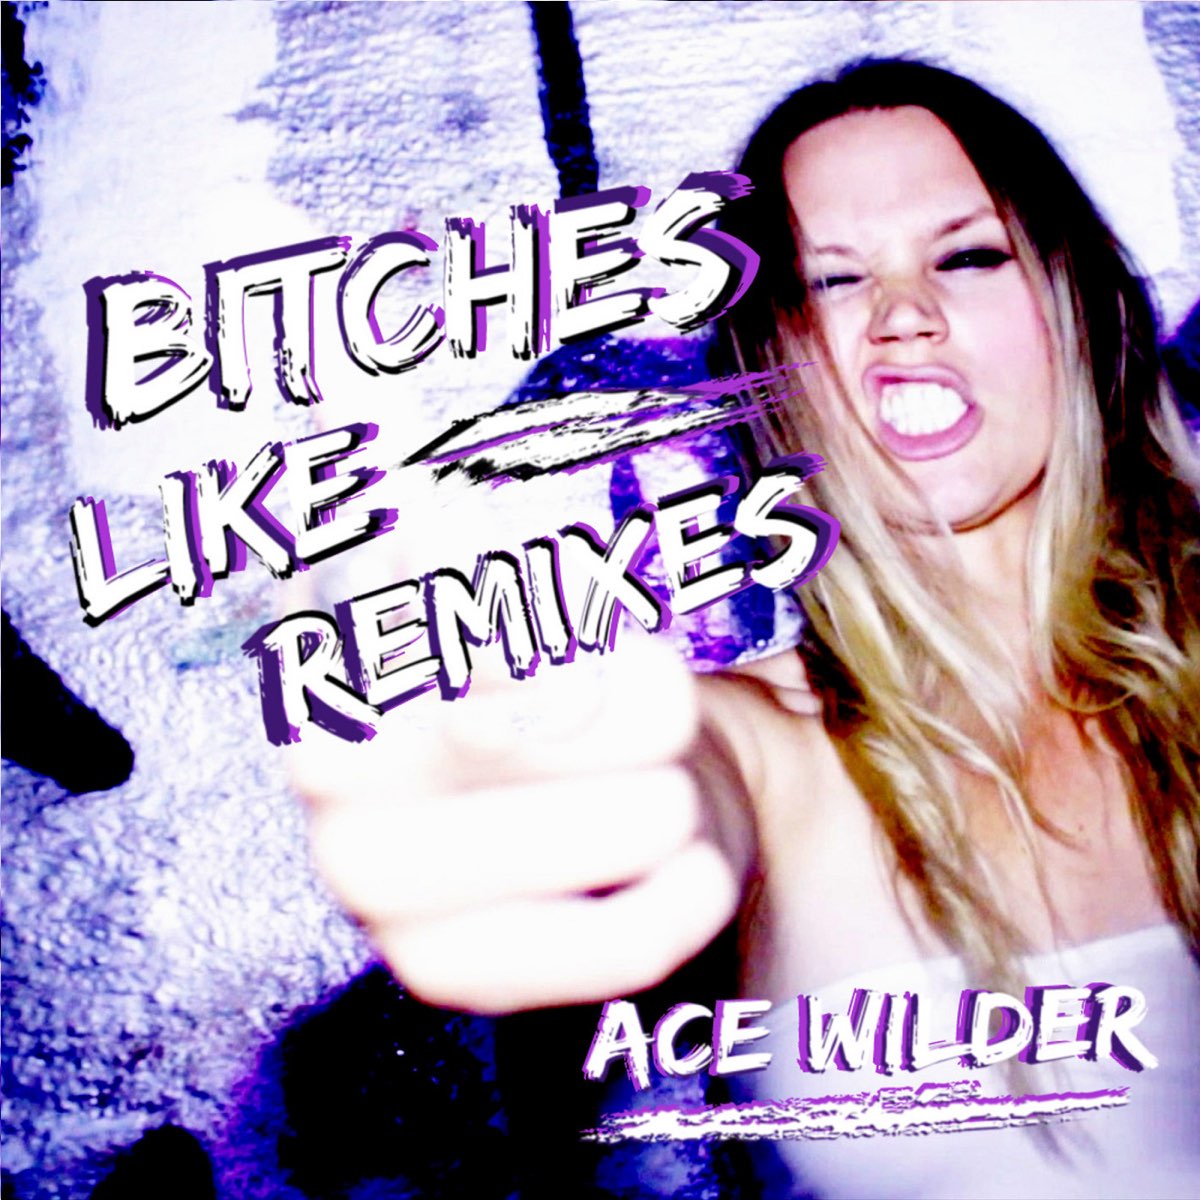 Bitch like me. Ace Wilder. Aces Wild-1994 Race. Песня бичес.